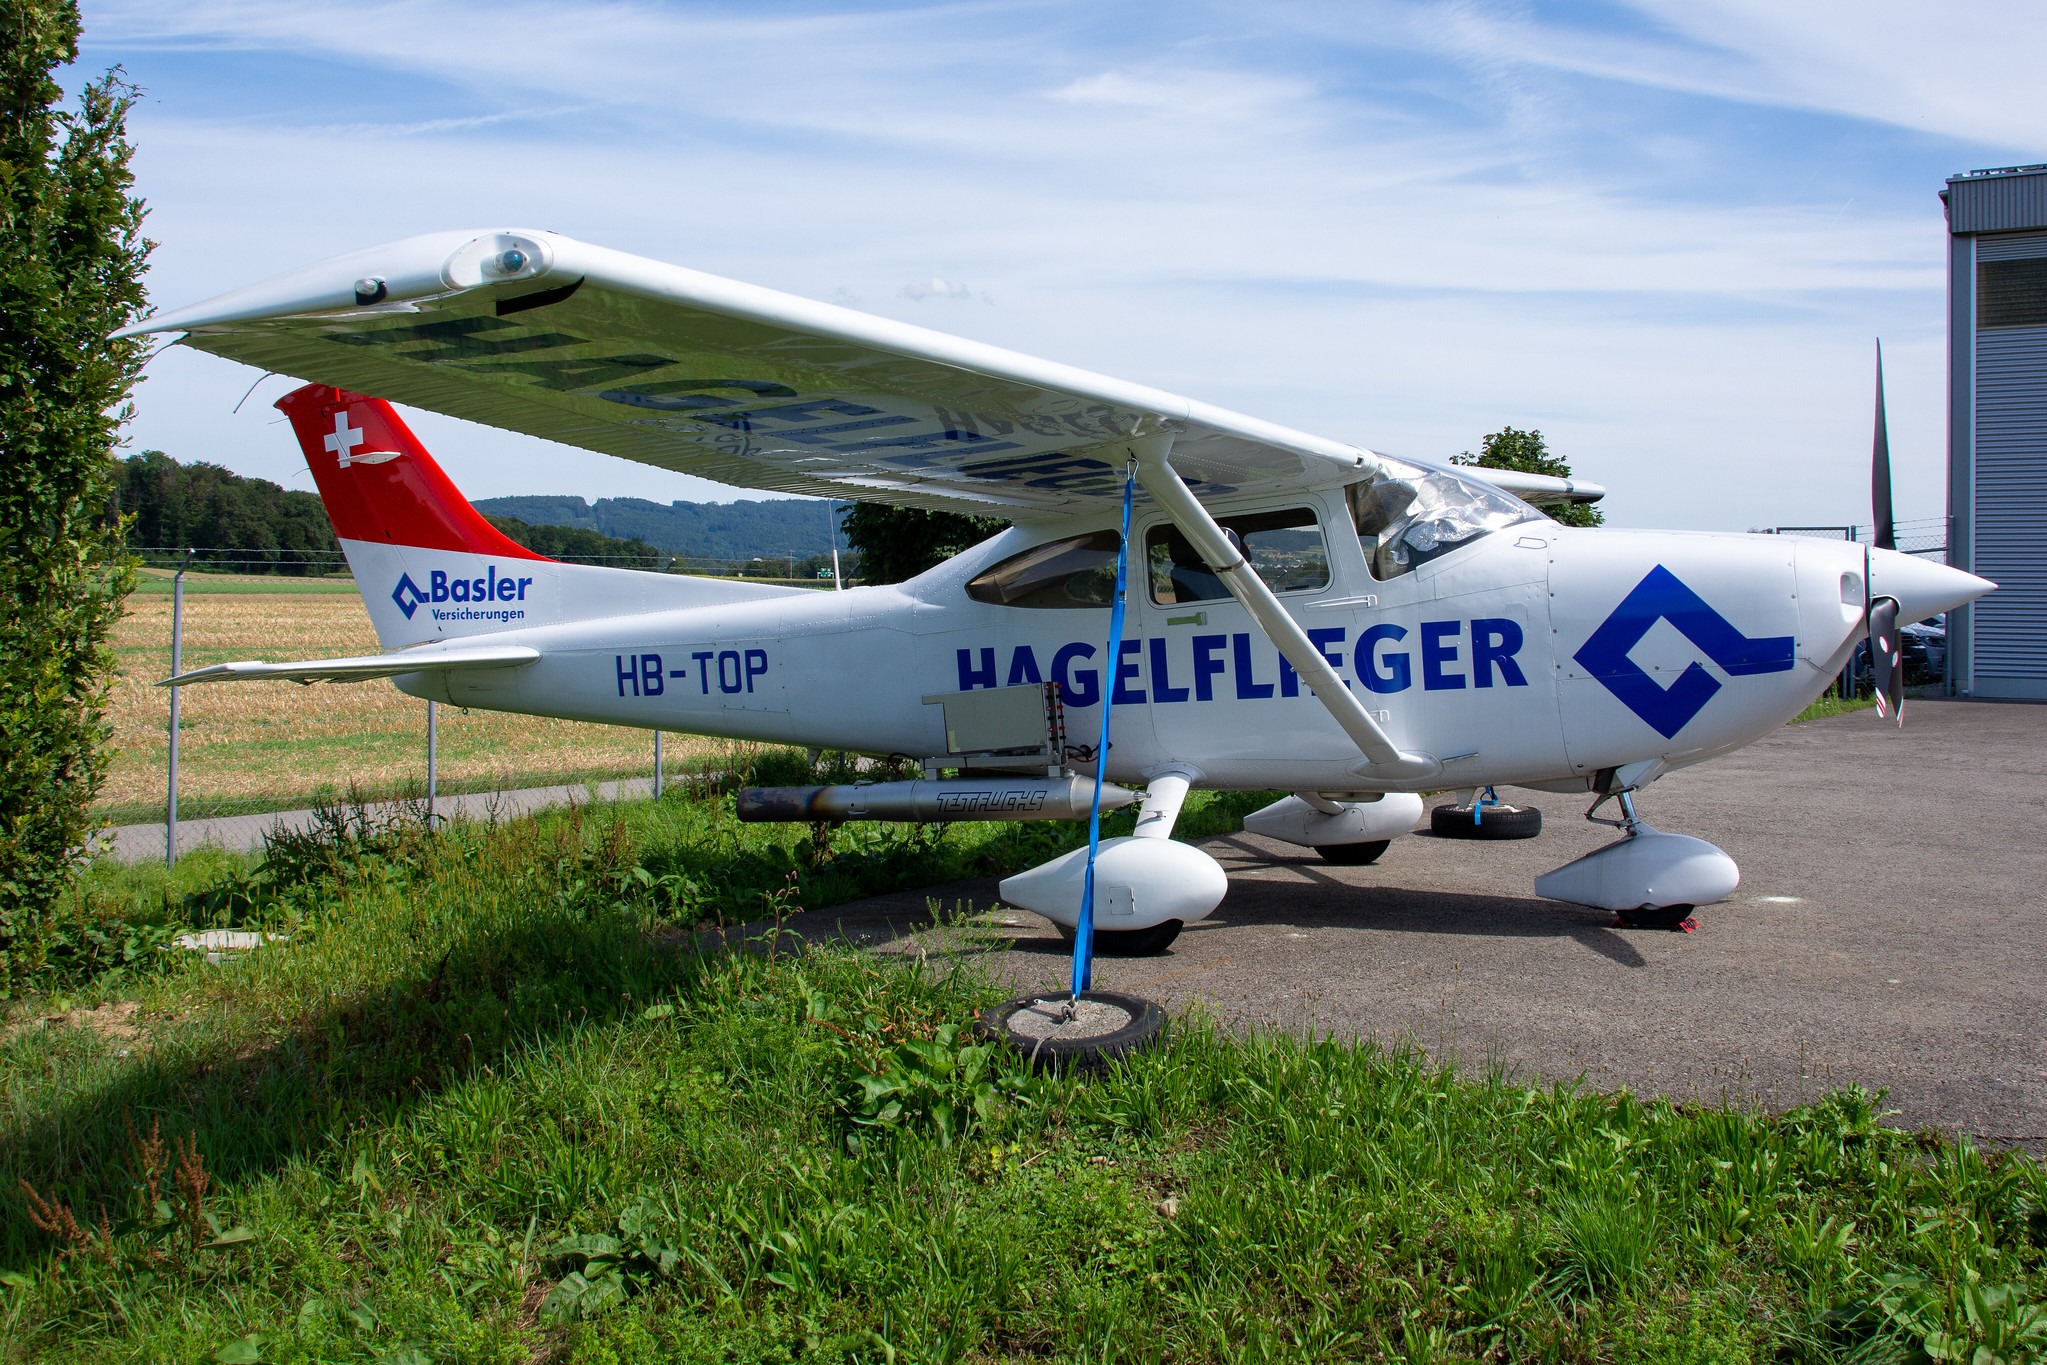 Hagel 2022: Cessna 182T Skylane, Registration: HB-TOP, Location: Birrfeld. Bild von Gideon van Dijk auf flickr.